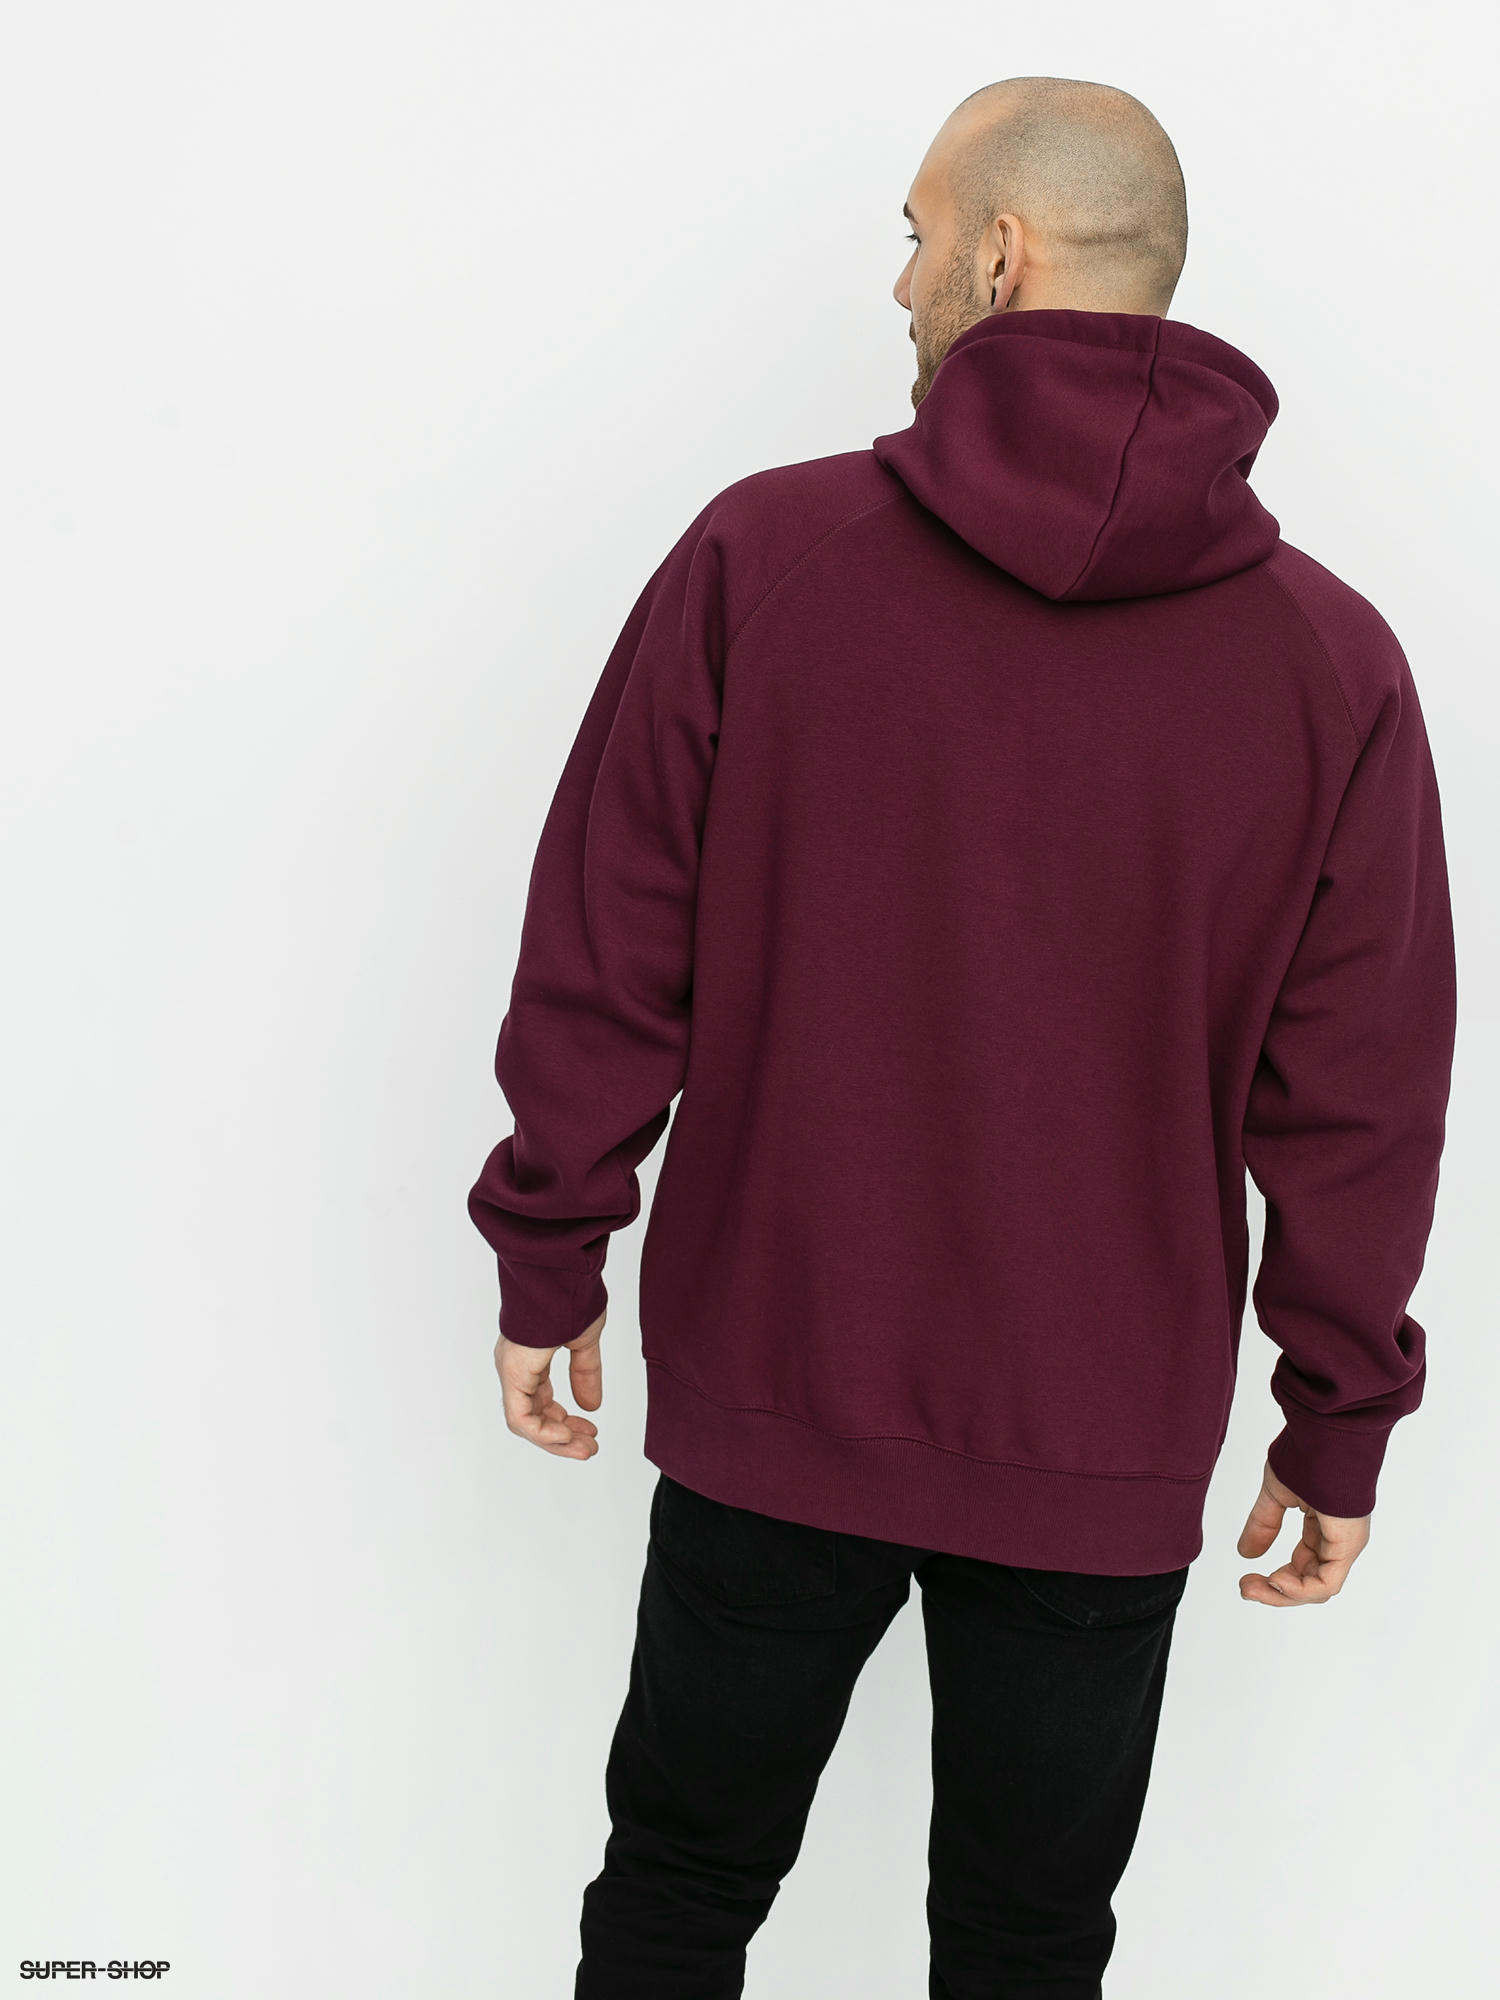 Buy > carhartt burgundy sweatshirt > in stock